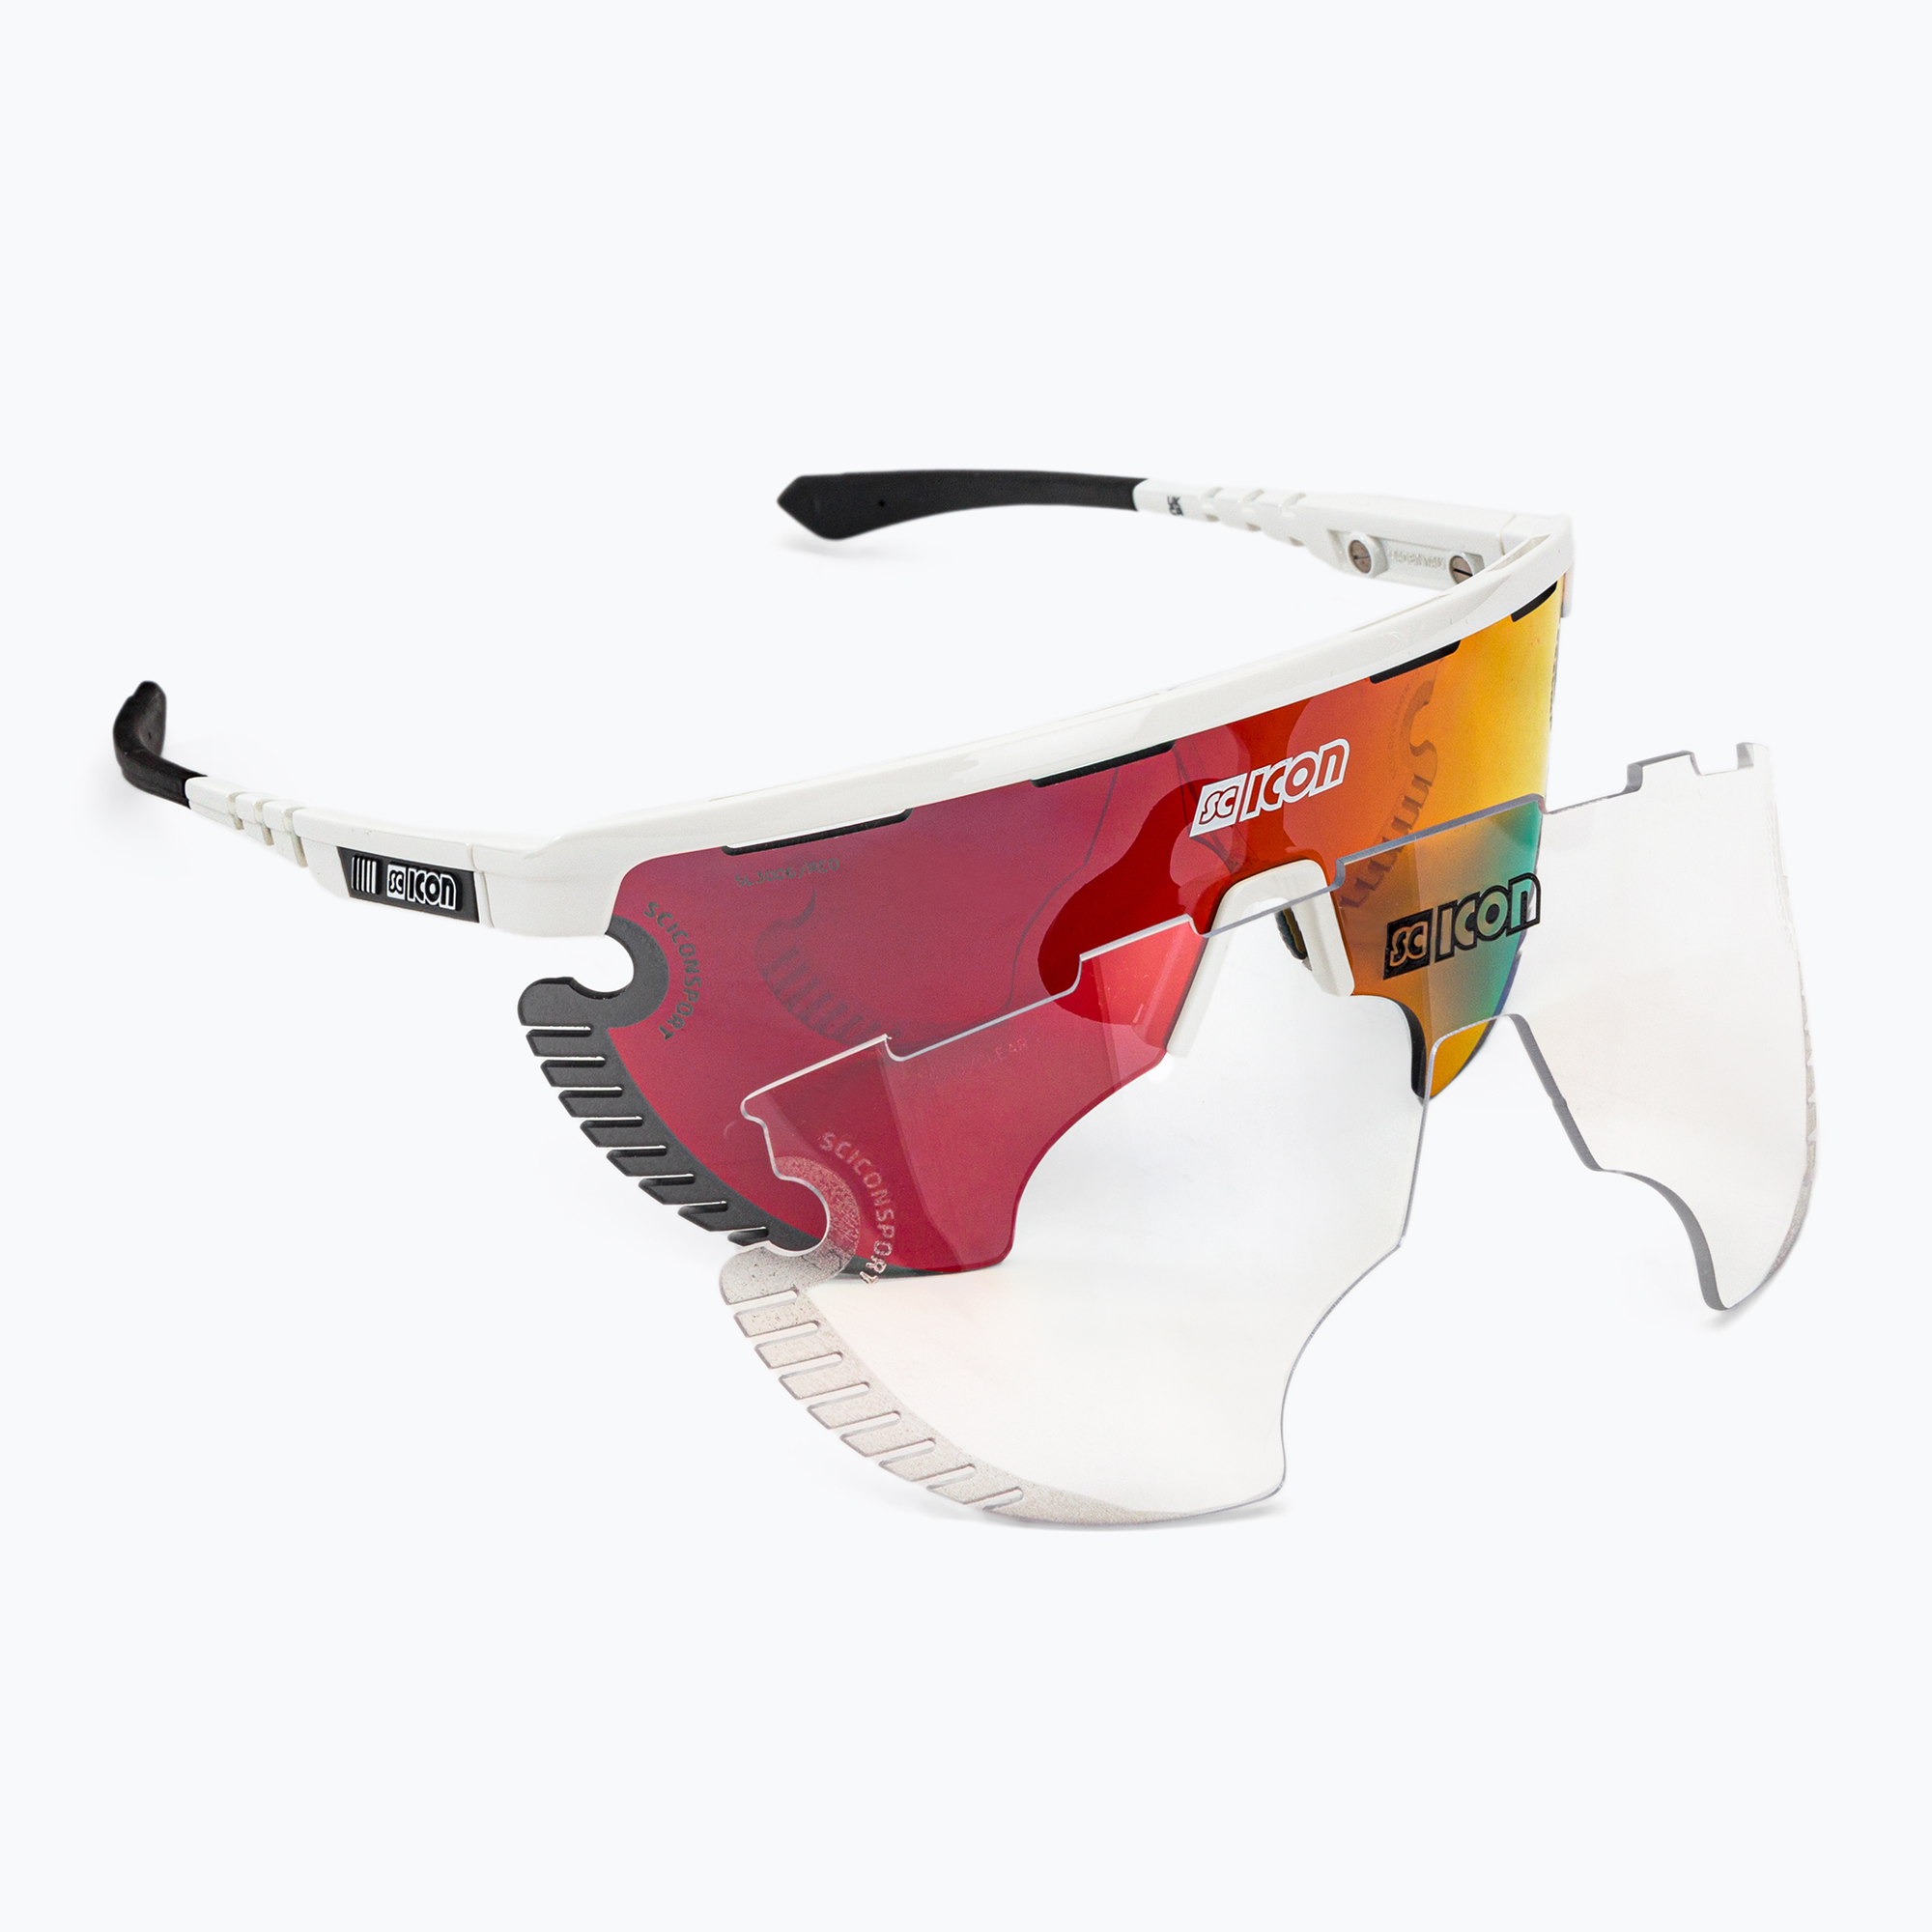 SCICON Aerowing Lamon бели гланц/скнп мултиогледални червени очила за колоездене EY30060800